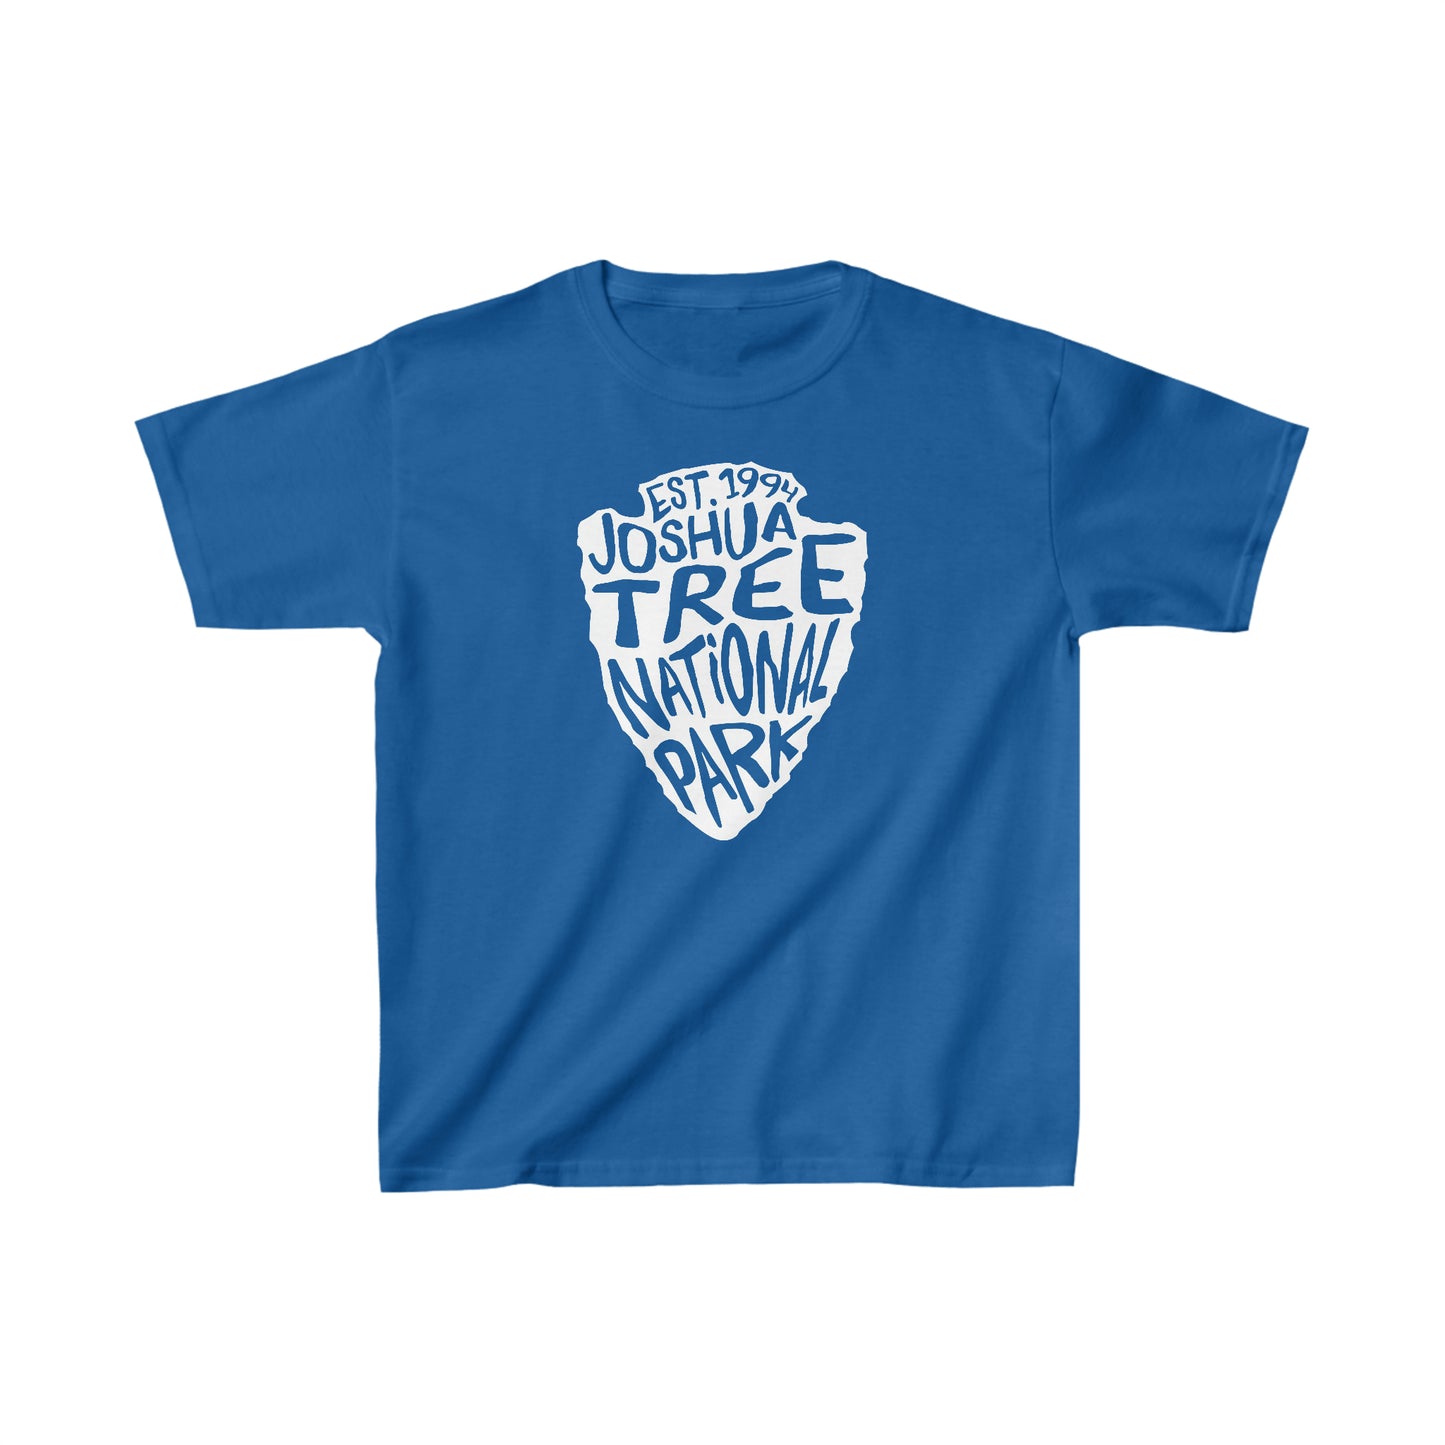 Joshua Tree National Park Child T-Shirt - Arrowhead Design